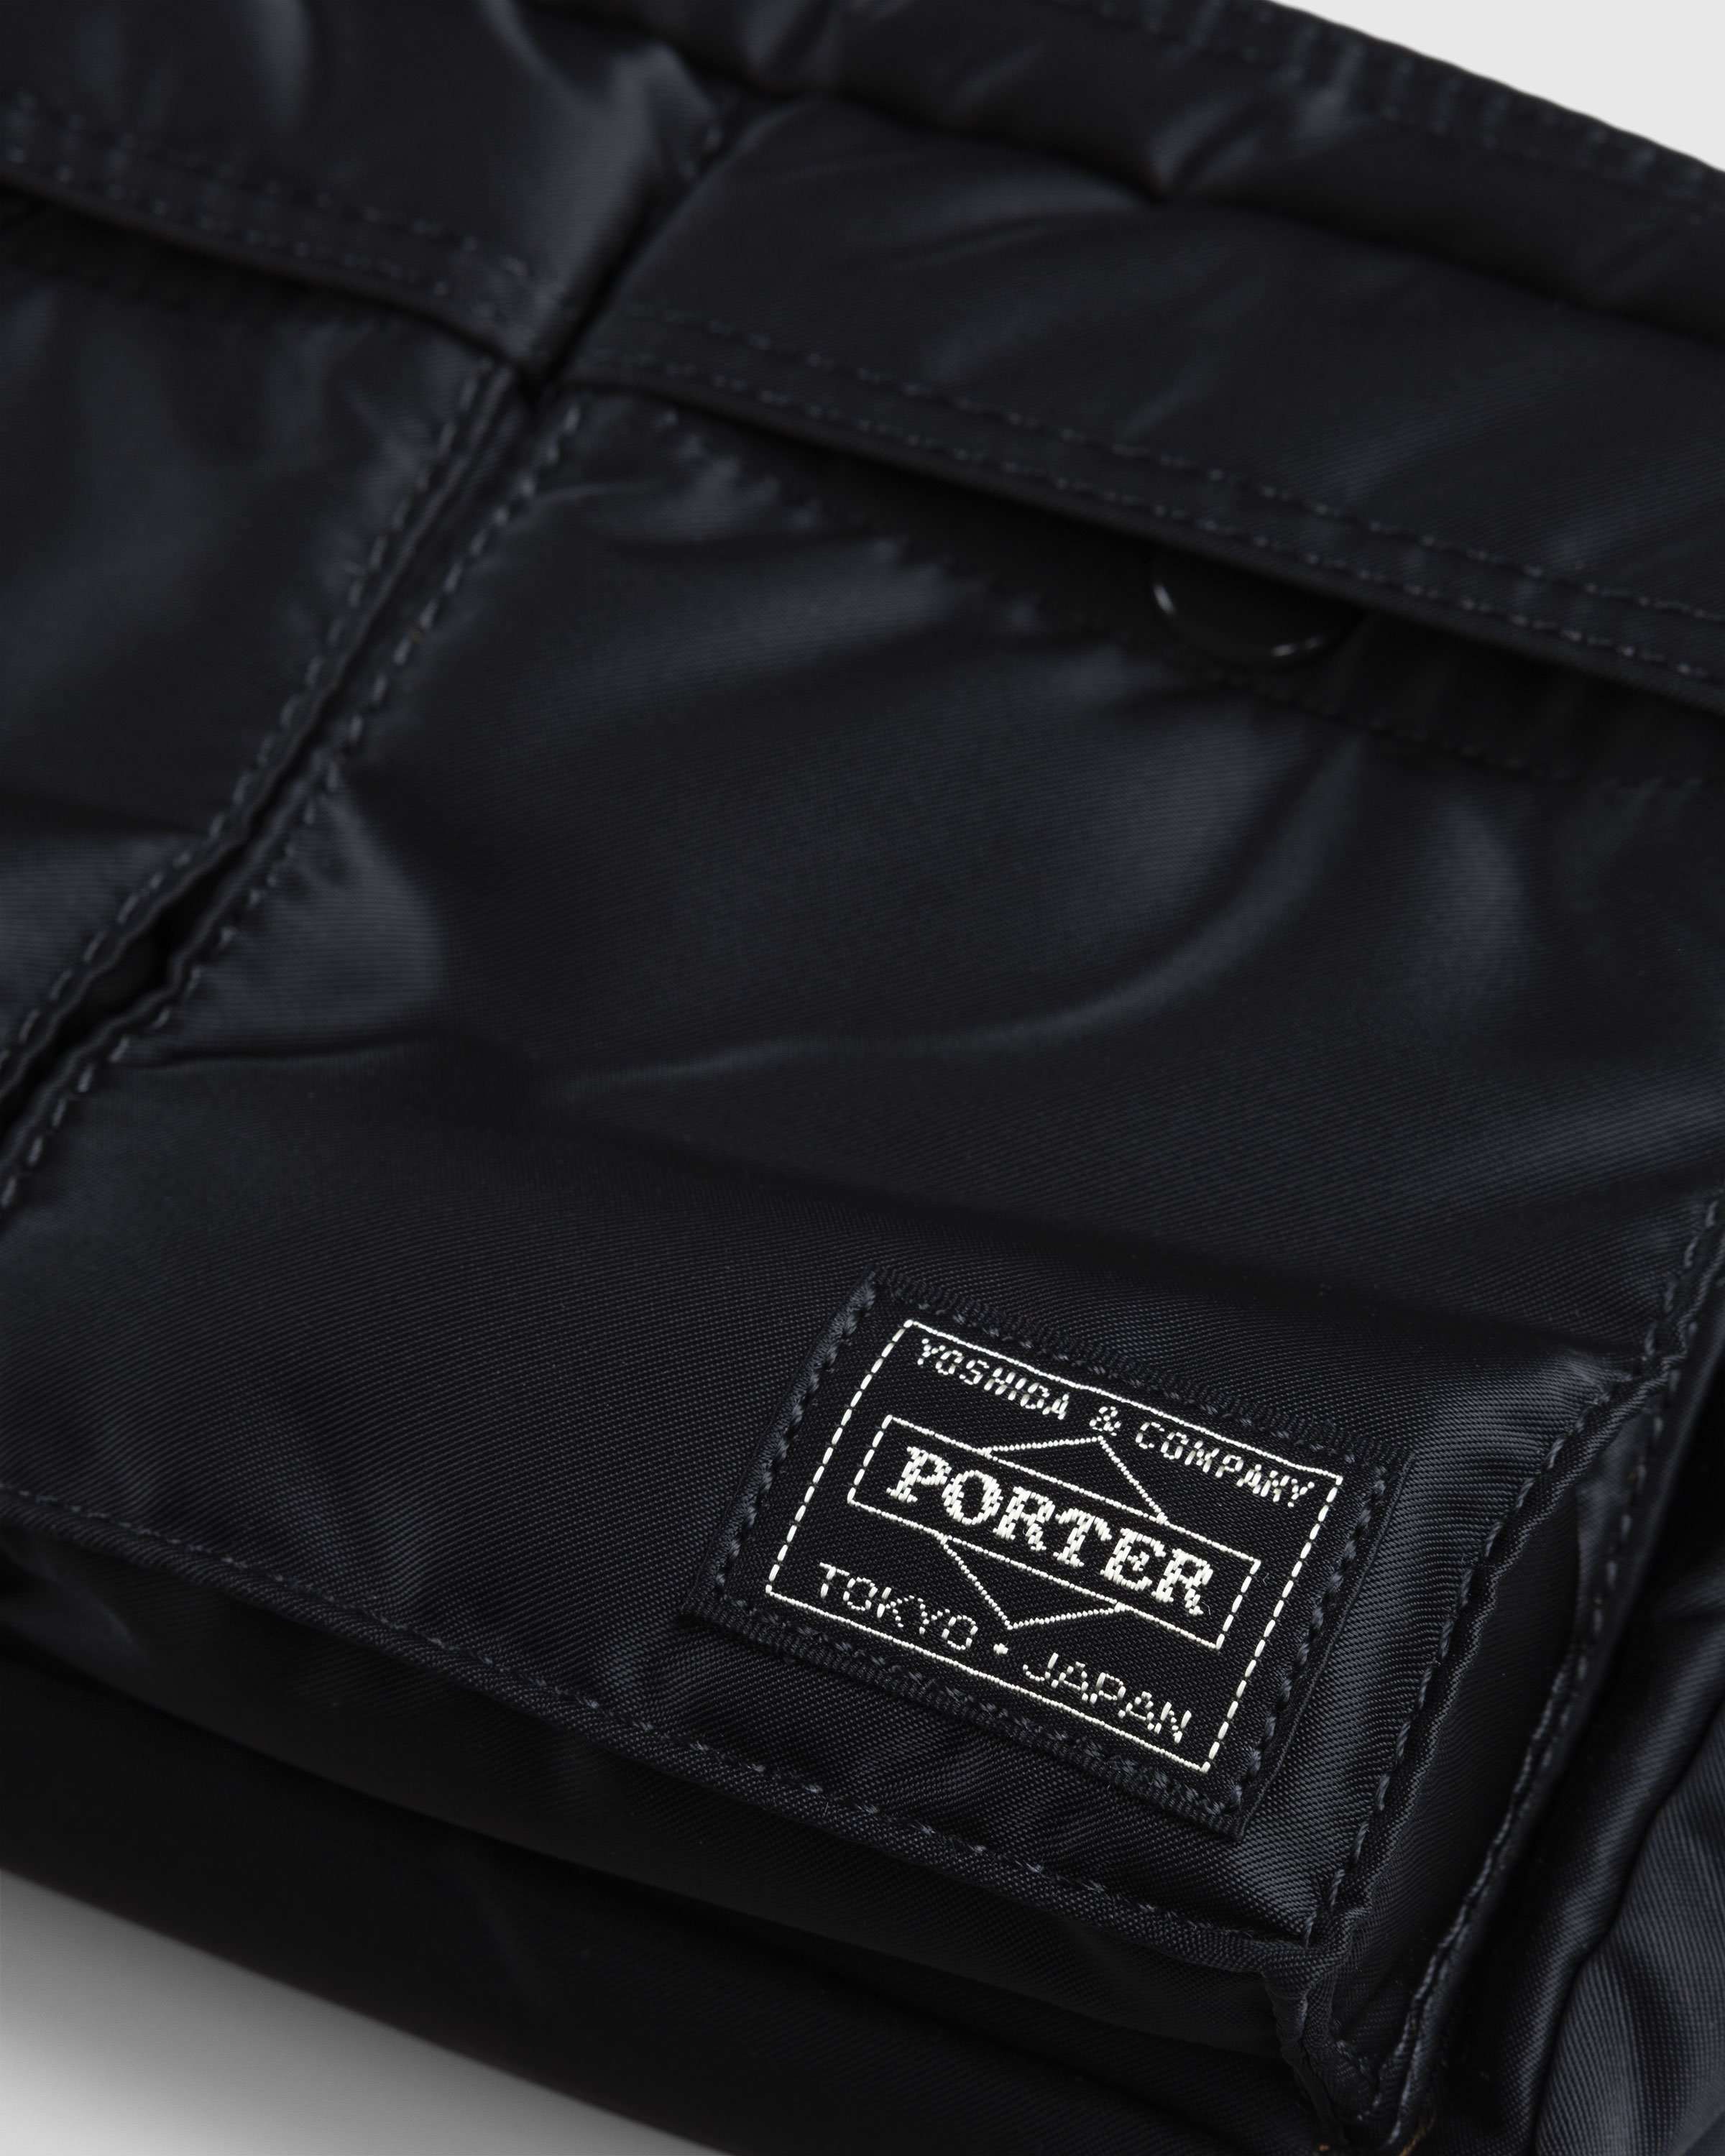 Porter-Yoshida & Co. - Tanker Waist Bag Black - Accessories - Black - Image 3